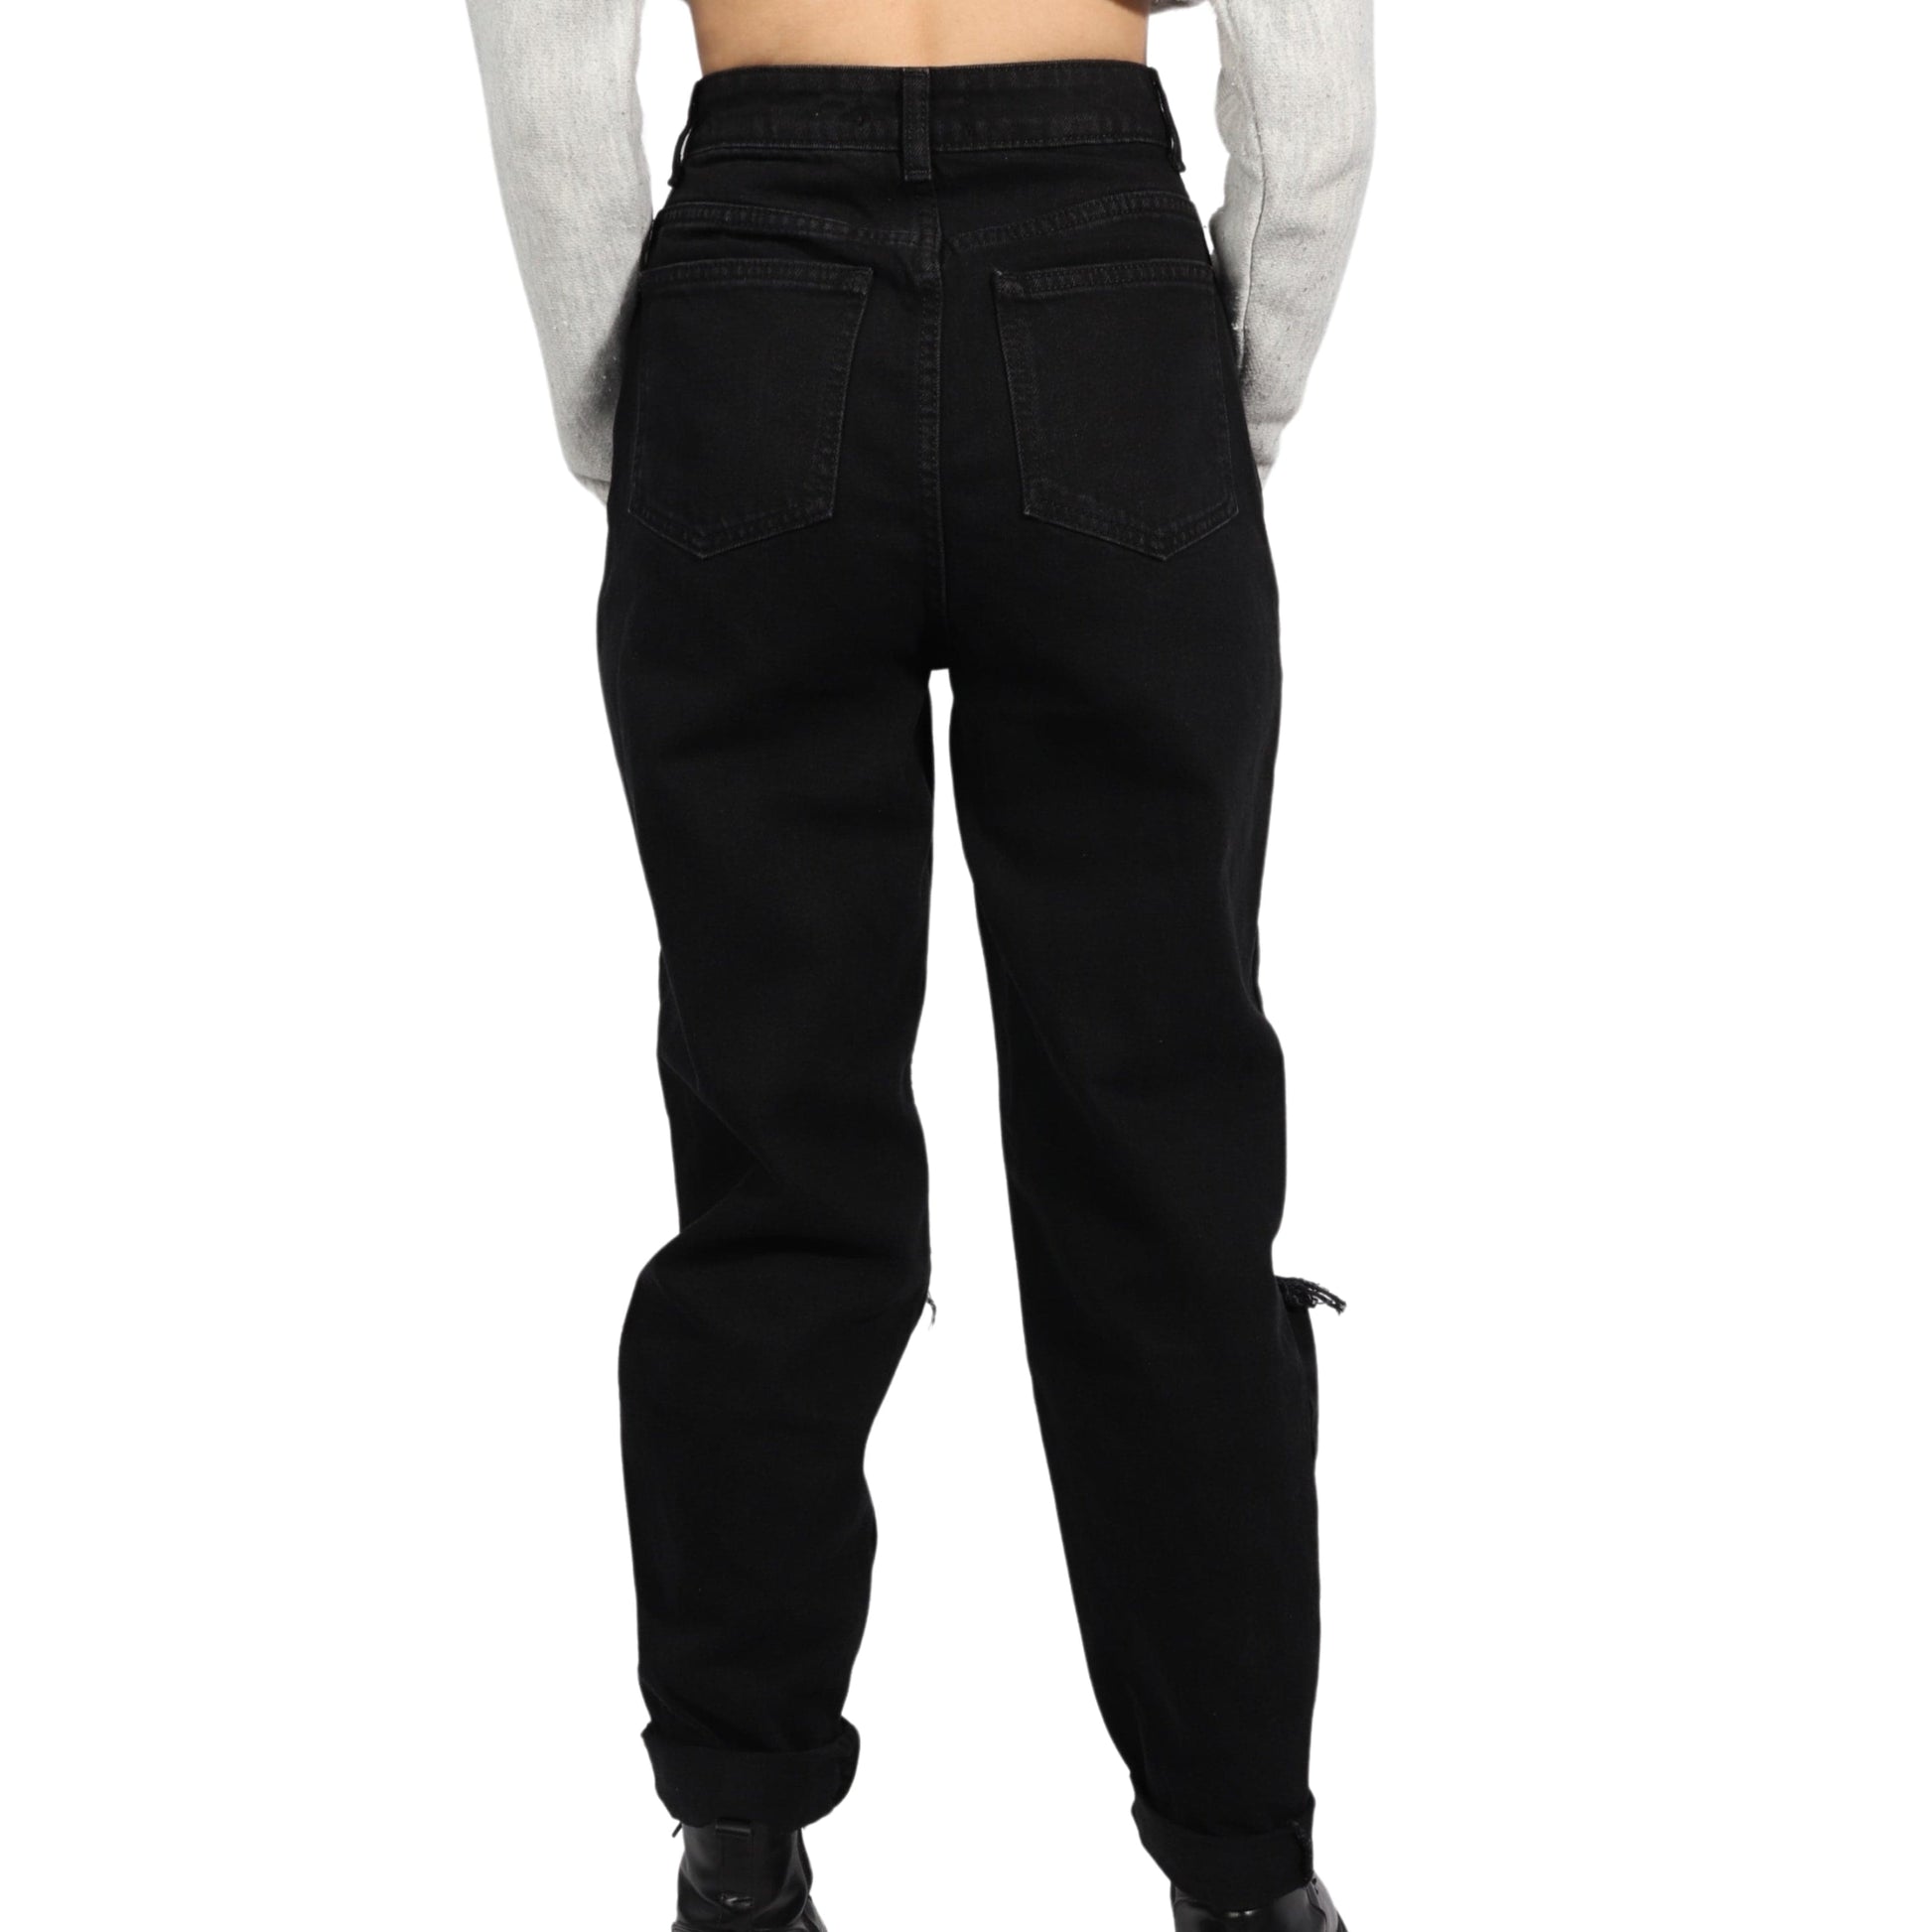 ASOS Womens Bottoms XS / Black ASOS  - Jeans Zipper Front Ripped